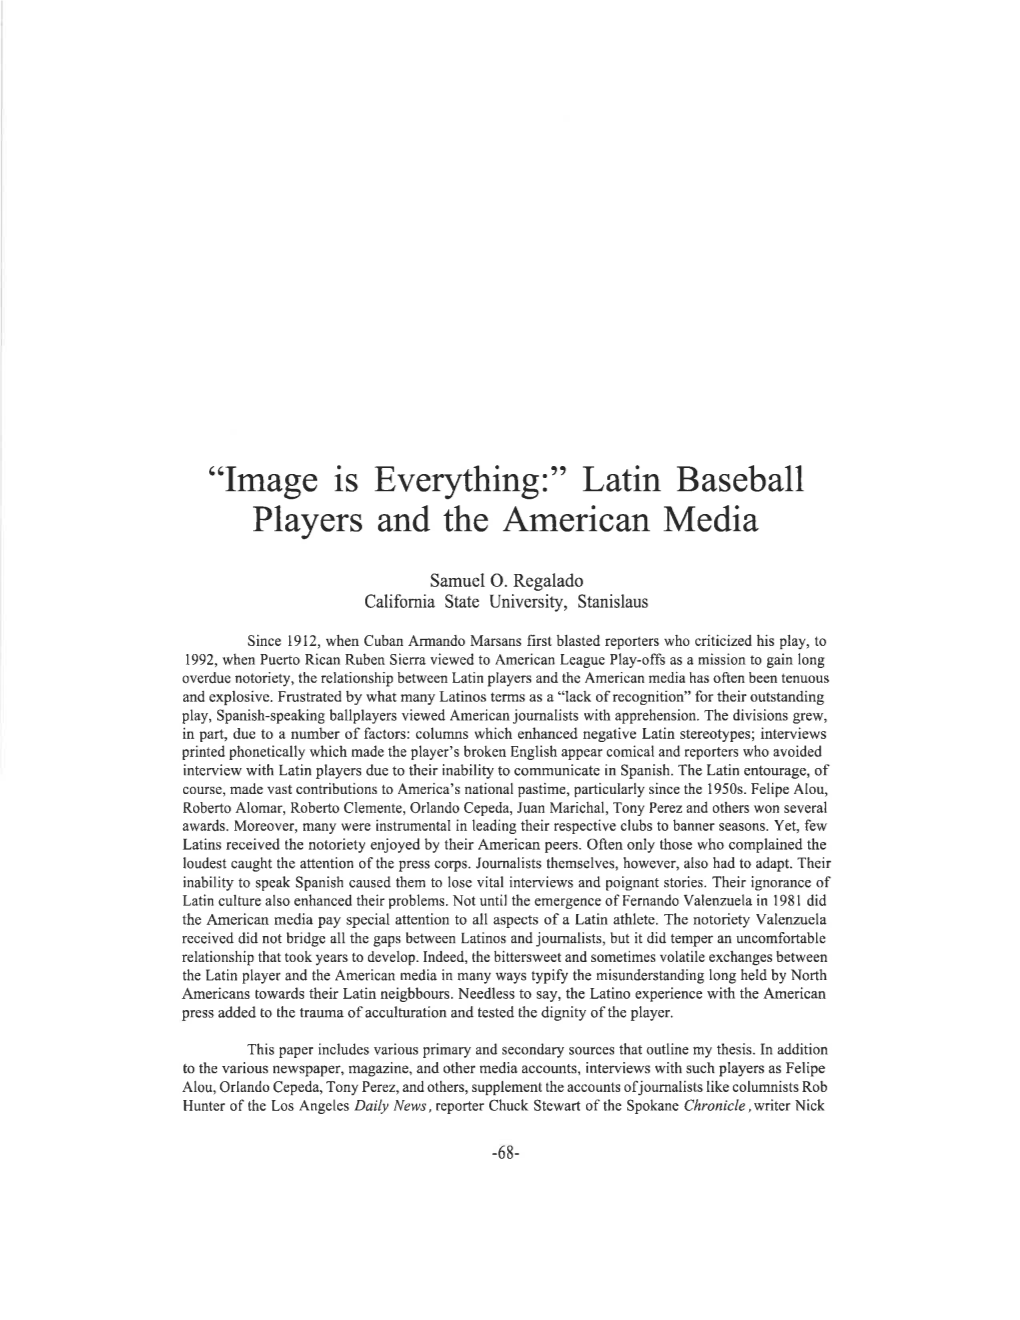 Latin Baseball Players and the American Media